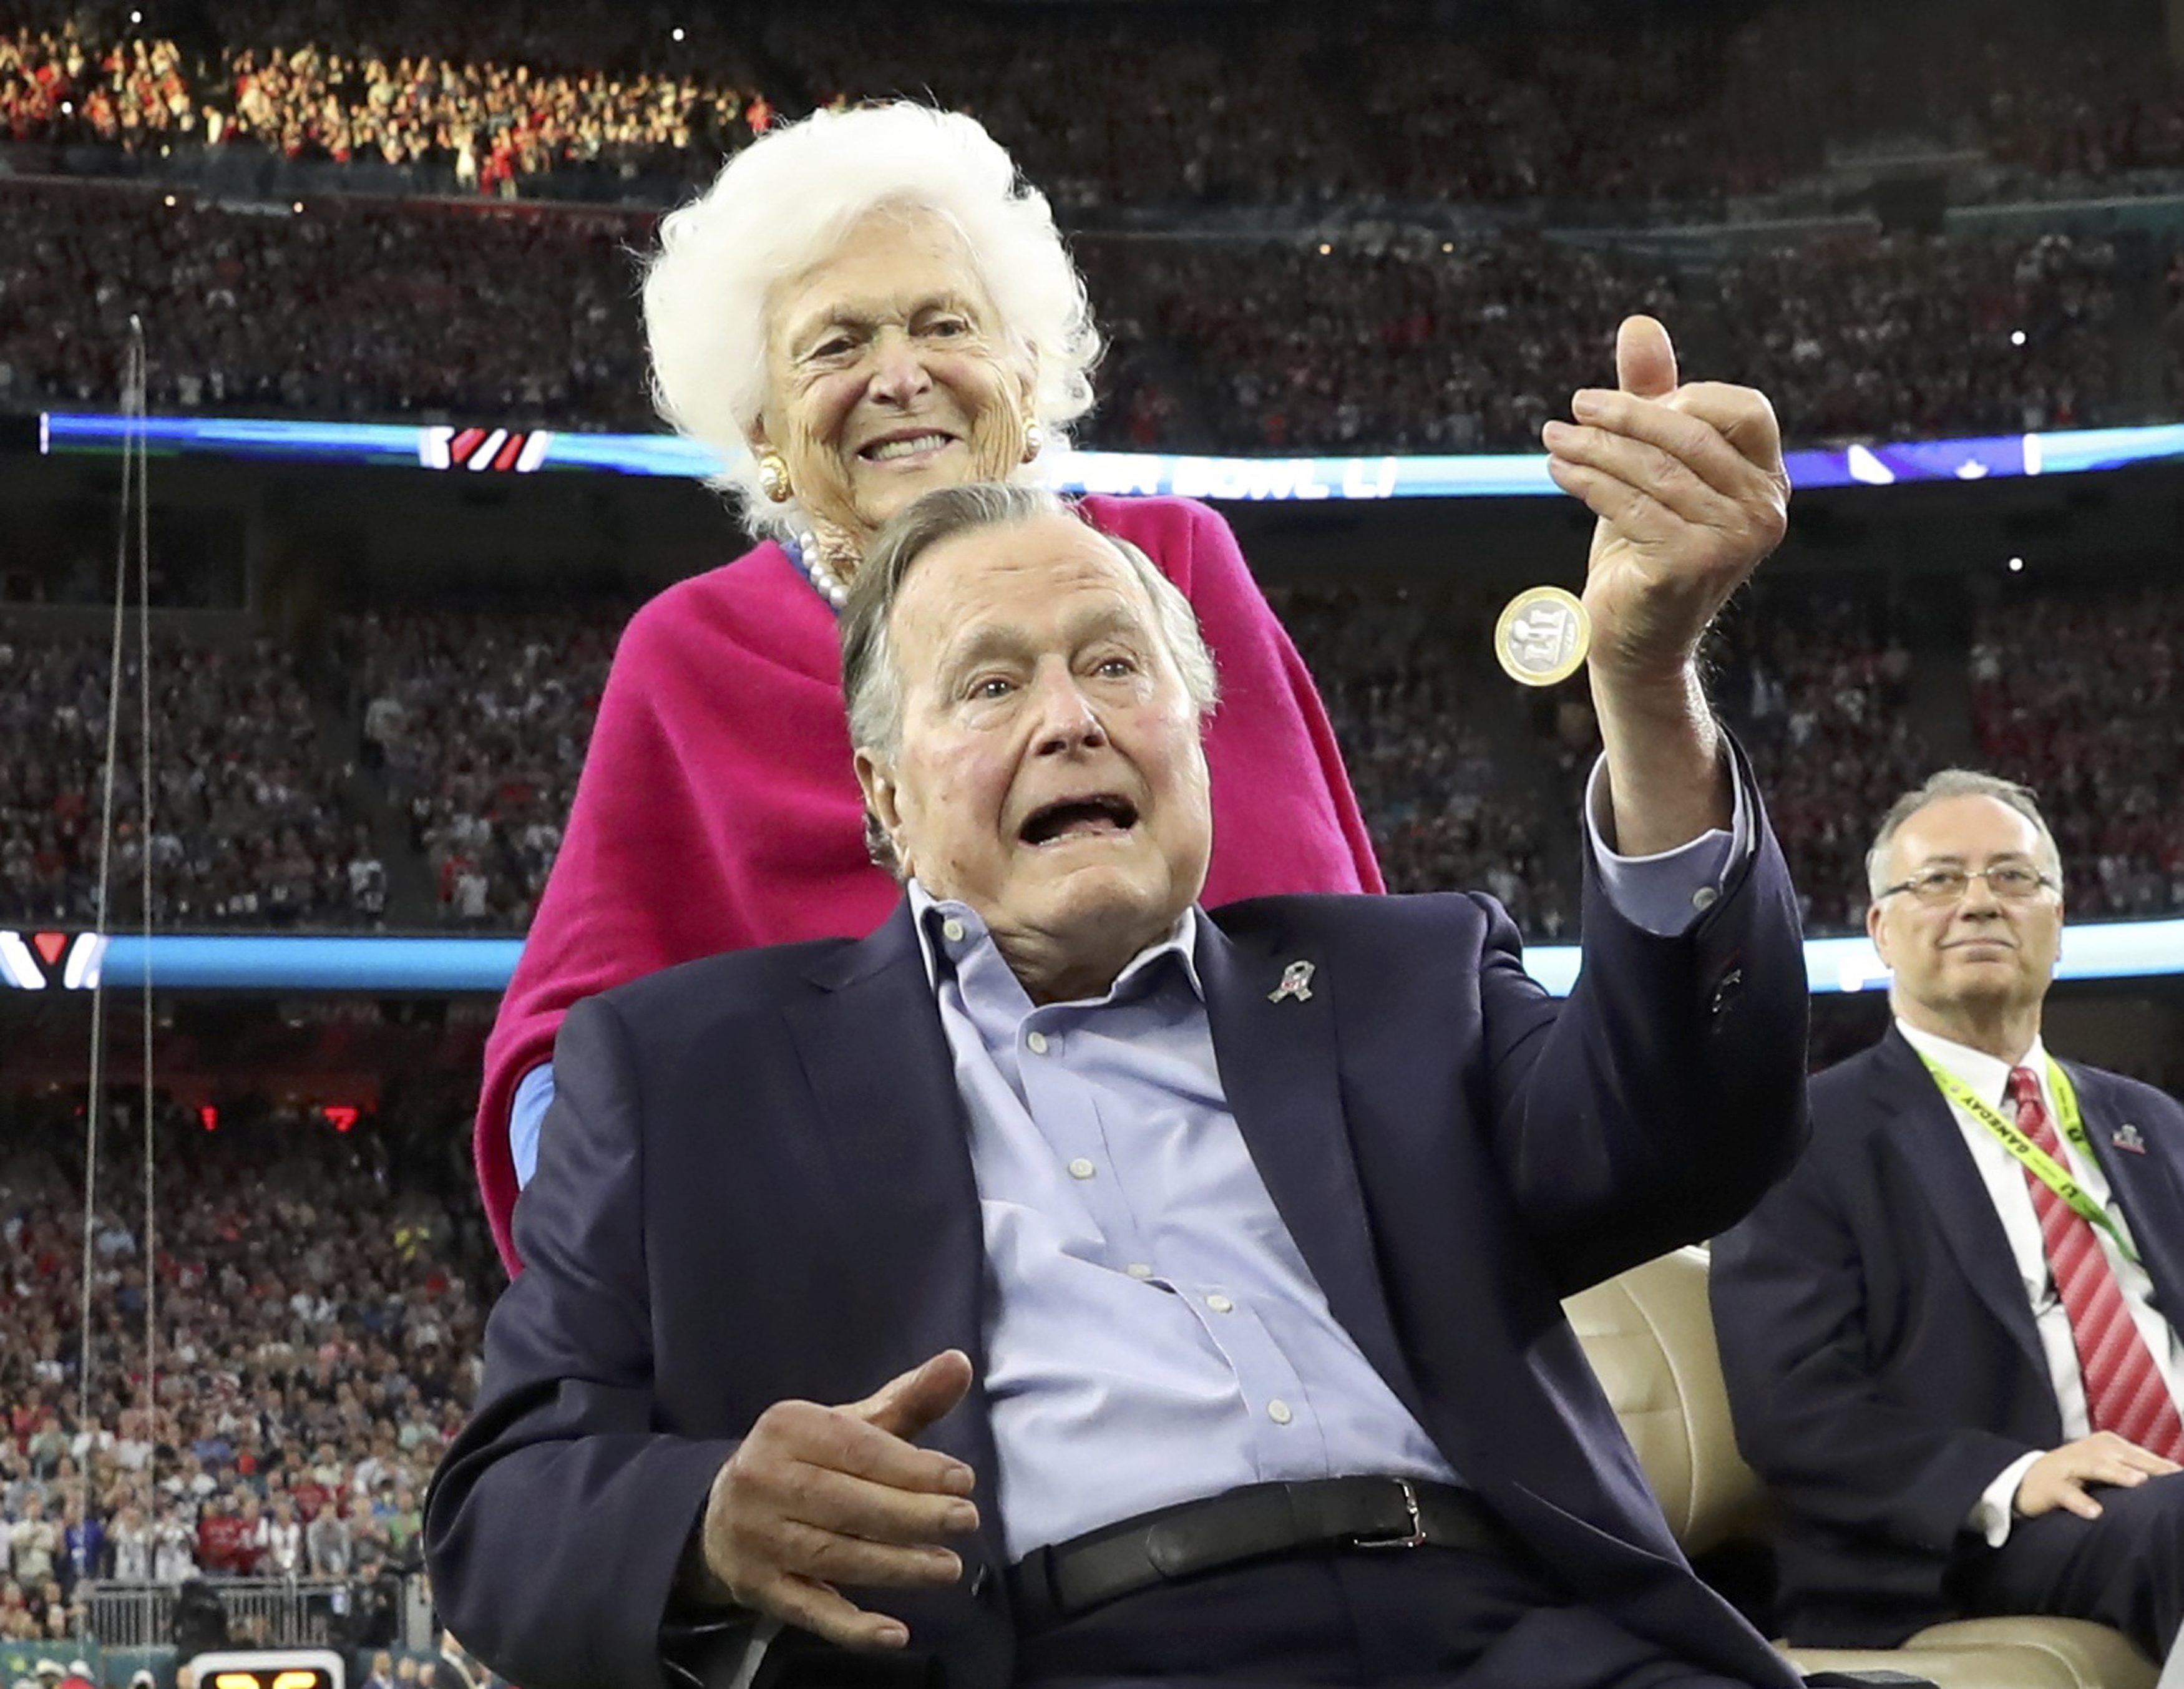 Bush padre lanza “volado” en arranque del Super Bowl LI